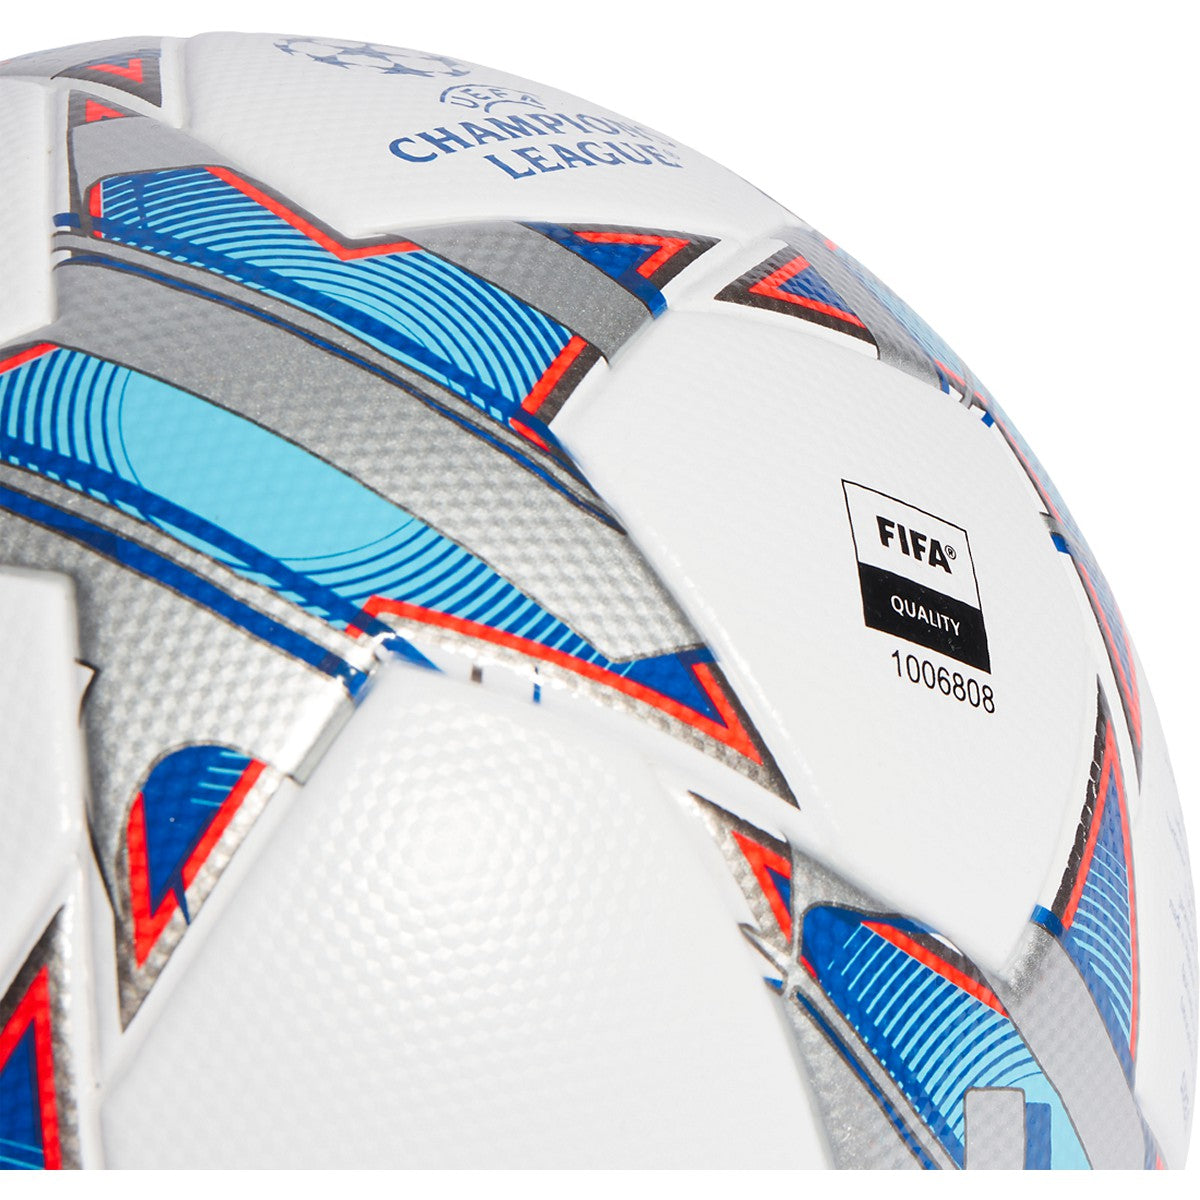 Adidas UEFA Champions League Soccer Ball 23/24